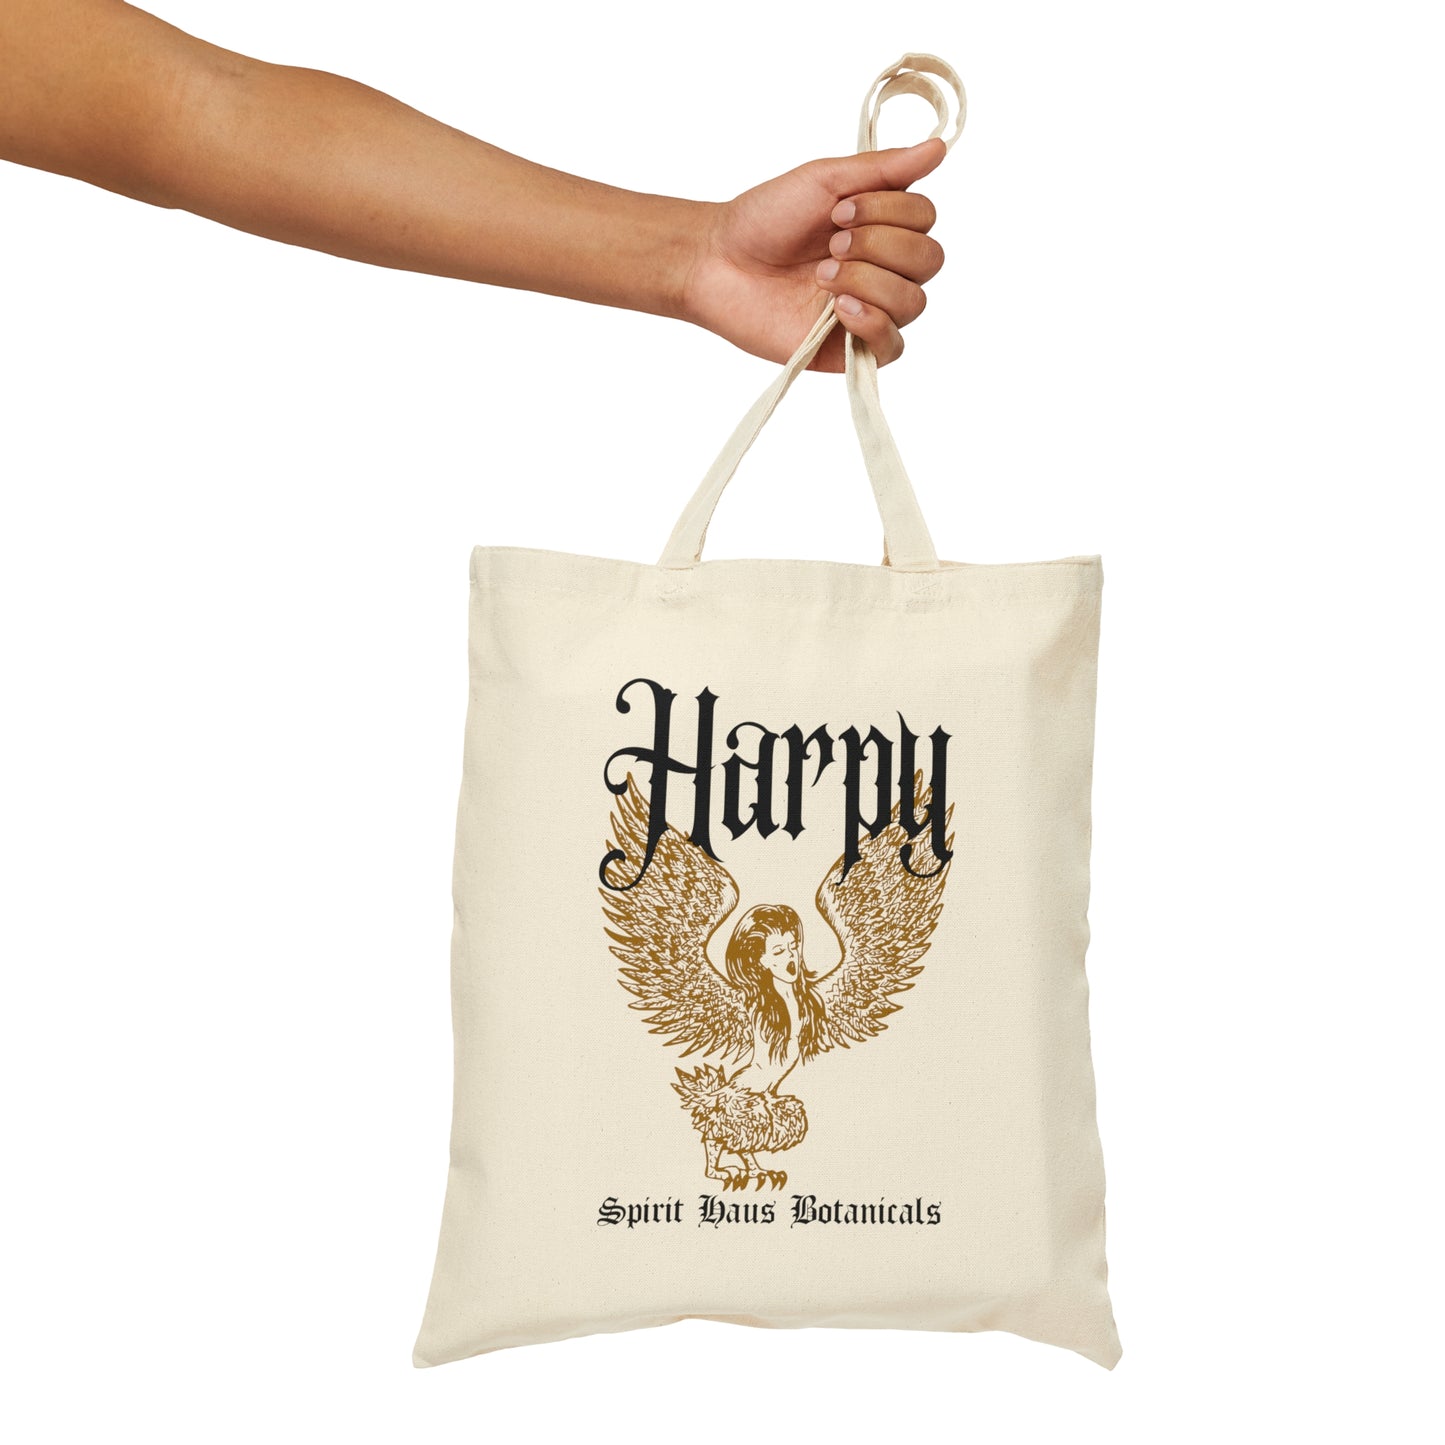 Harpy Herald Canvas Tote Bag